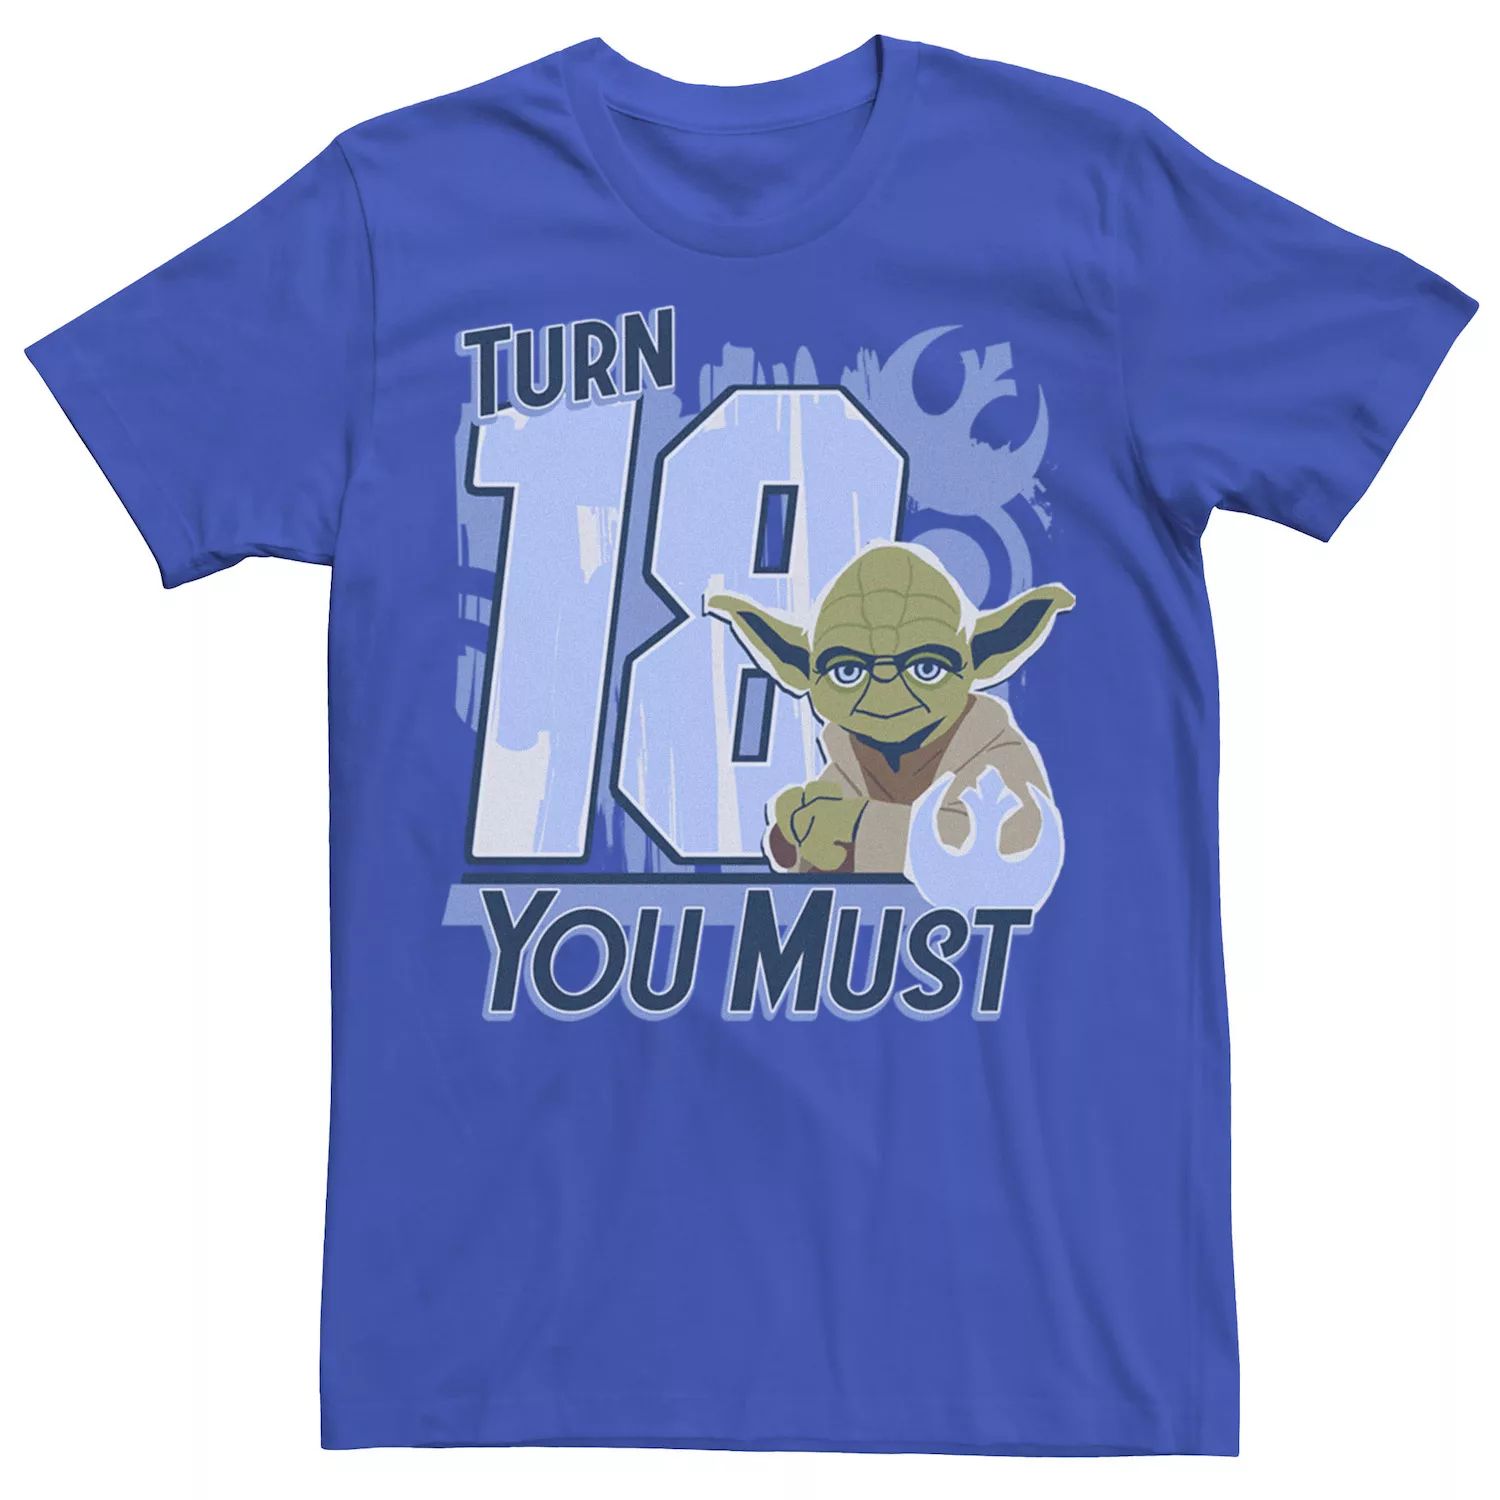 Мужская футболка с логотипом и портретом Star Wars Yoda Turn 18 You Must Rebel